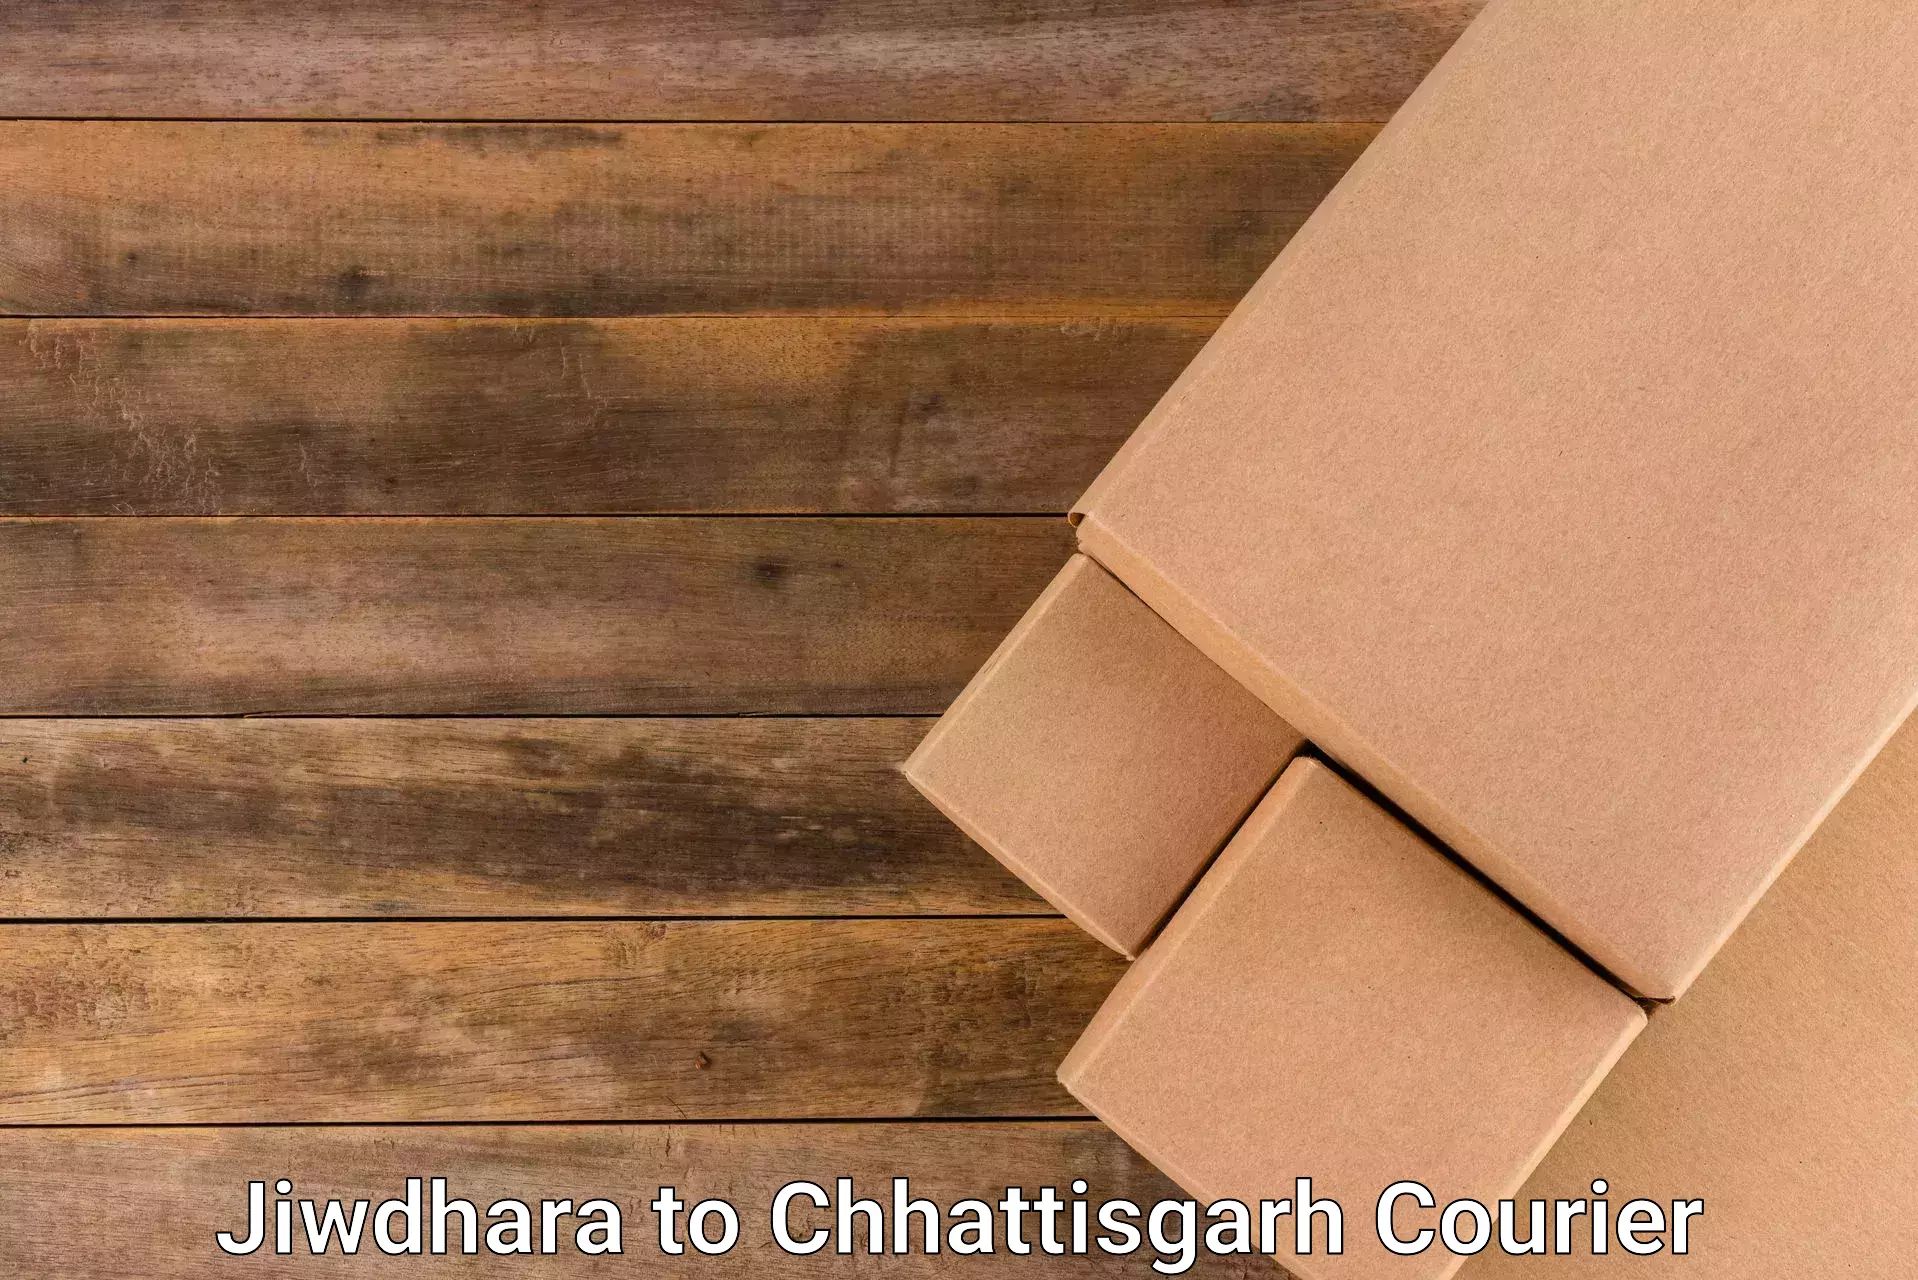 Courier service efficiency Jiwdhara to Korba